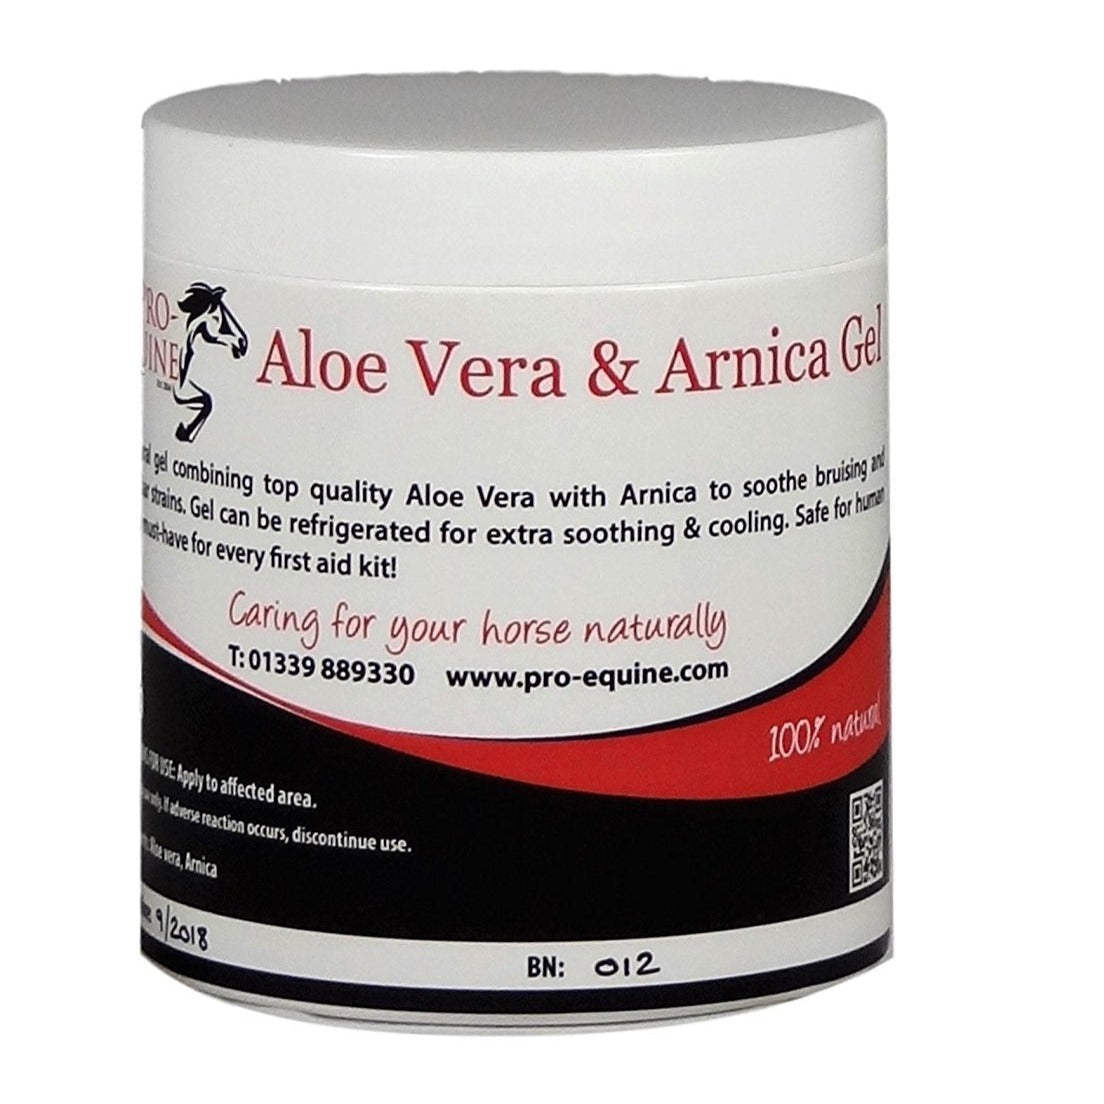 Pro-Equine Aloe Vera & Arnica Gel